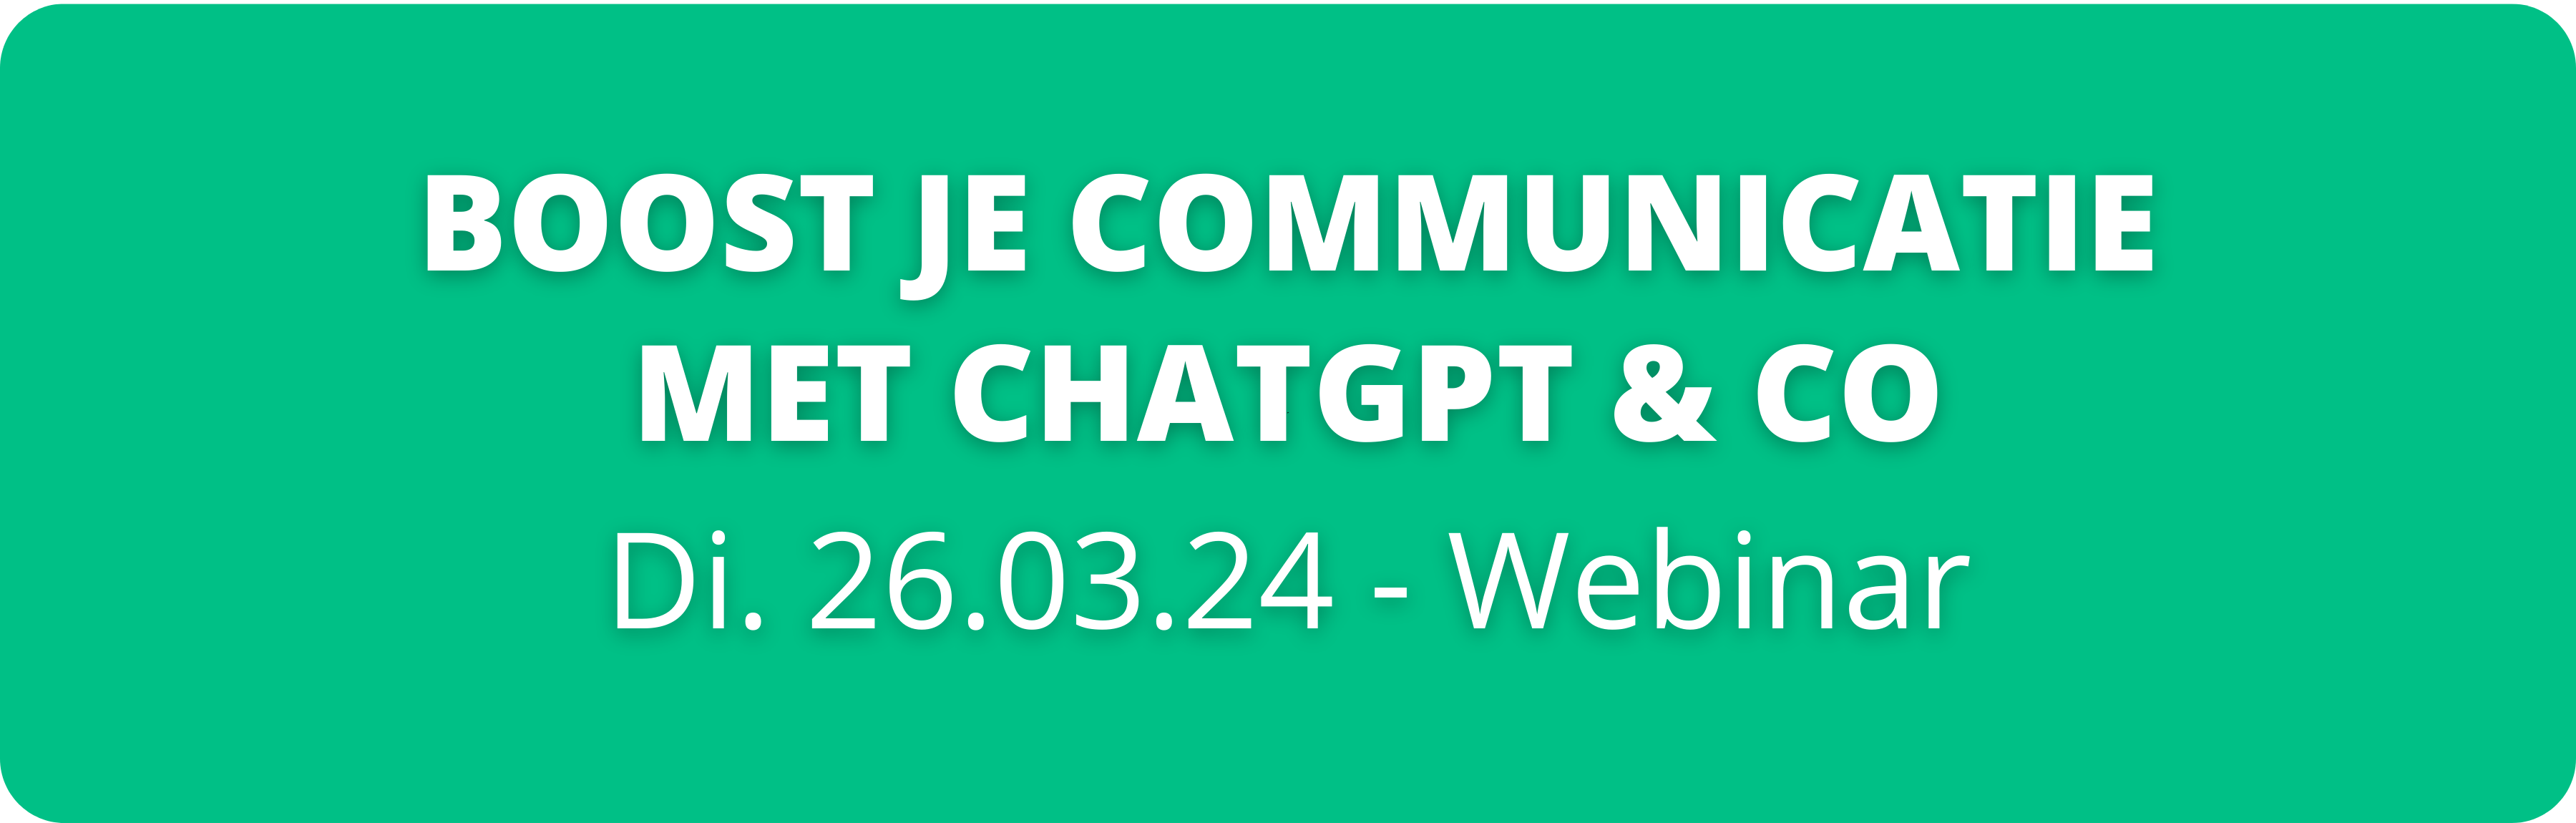 Webinar Boost je communicatie met ChatGPT en co